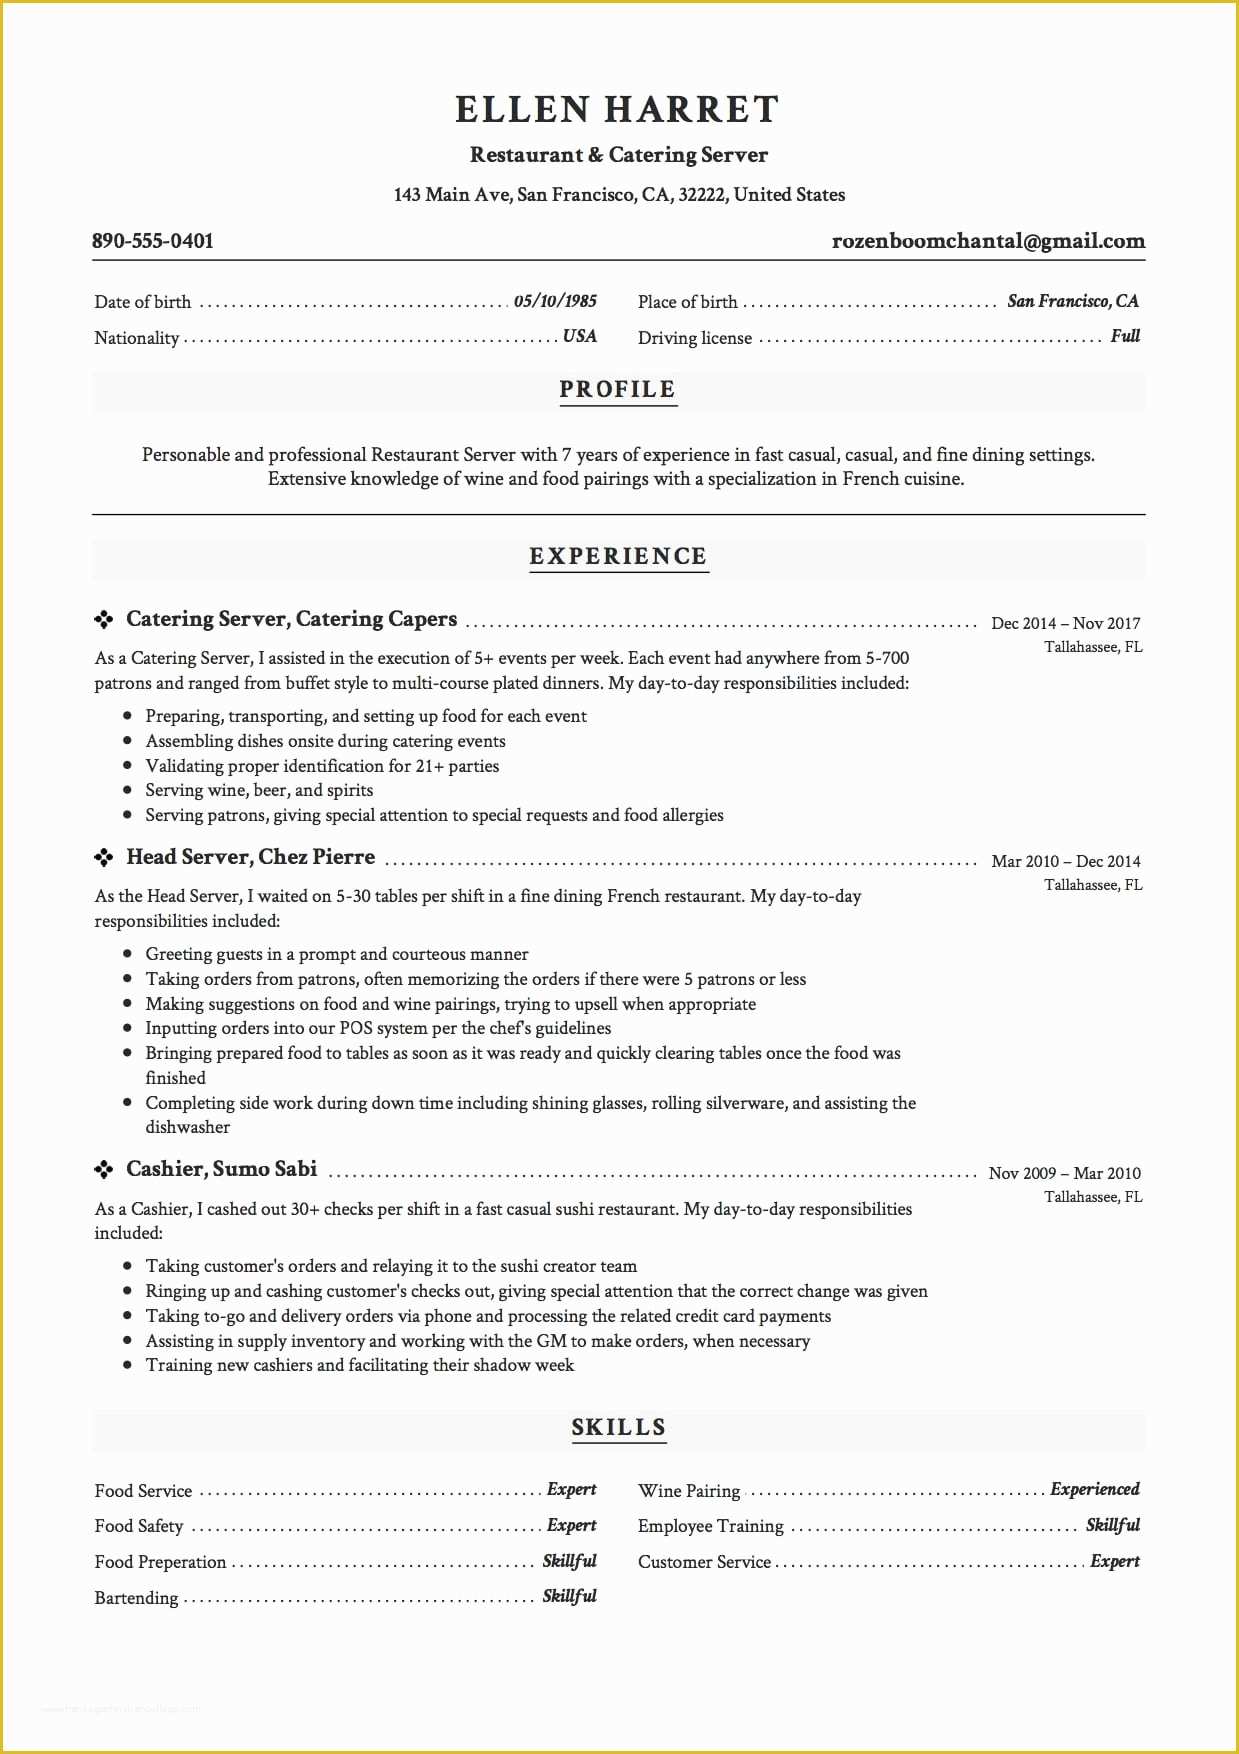 Free Resume Templates for Restaurant Servers Of 12 Restaurant Server Resume Sample S 2018 Free Downloads